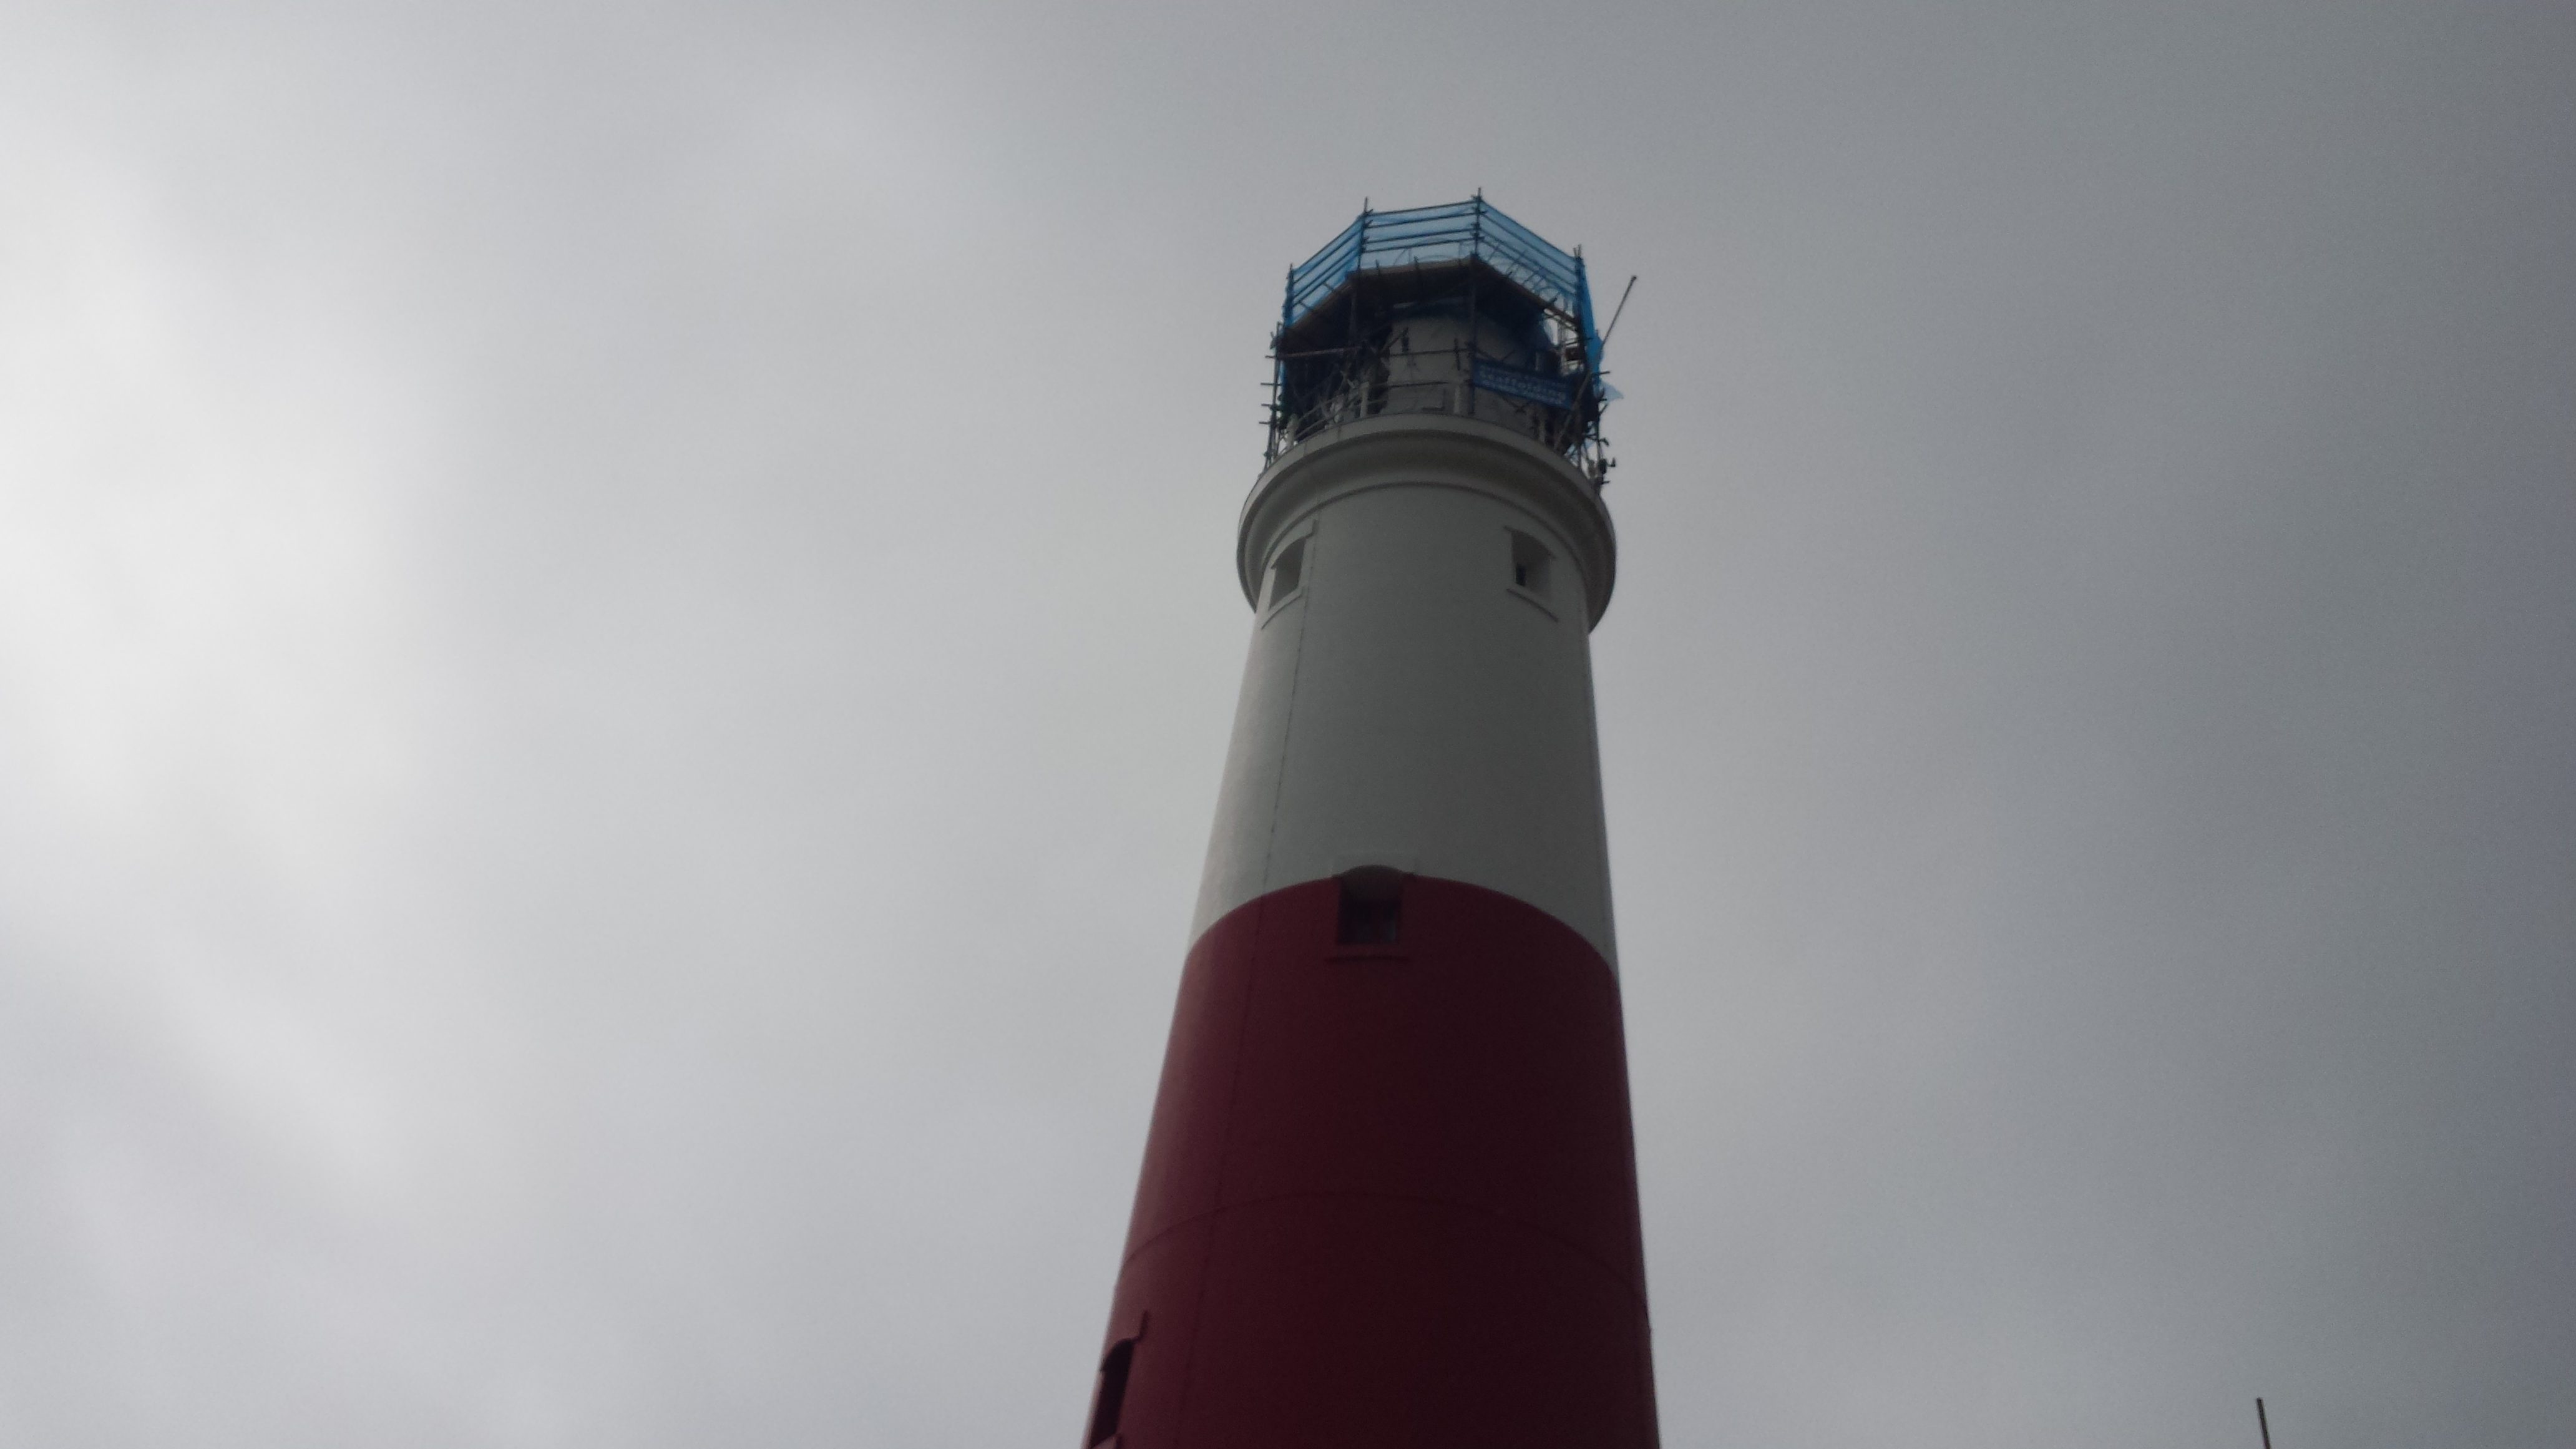 New Portland Lighthouse